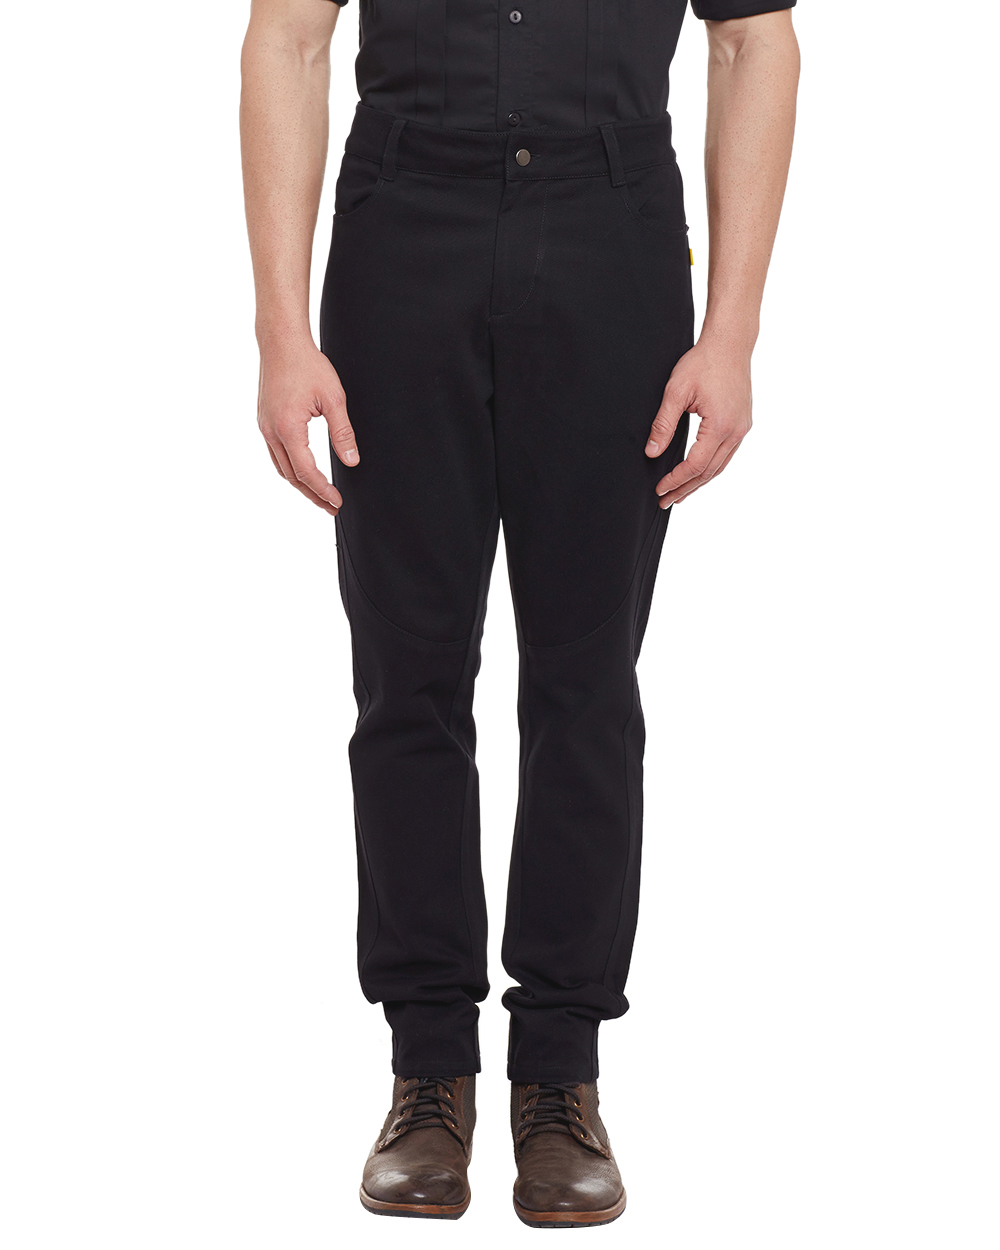 Jet black vintage jeans by Firm Clothing | The Secret Label